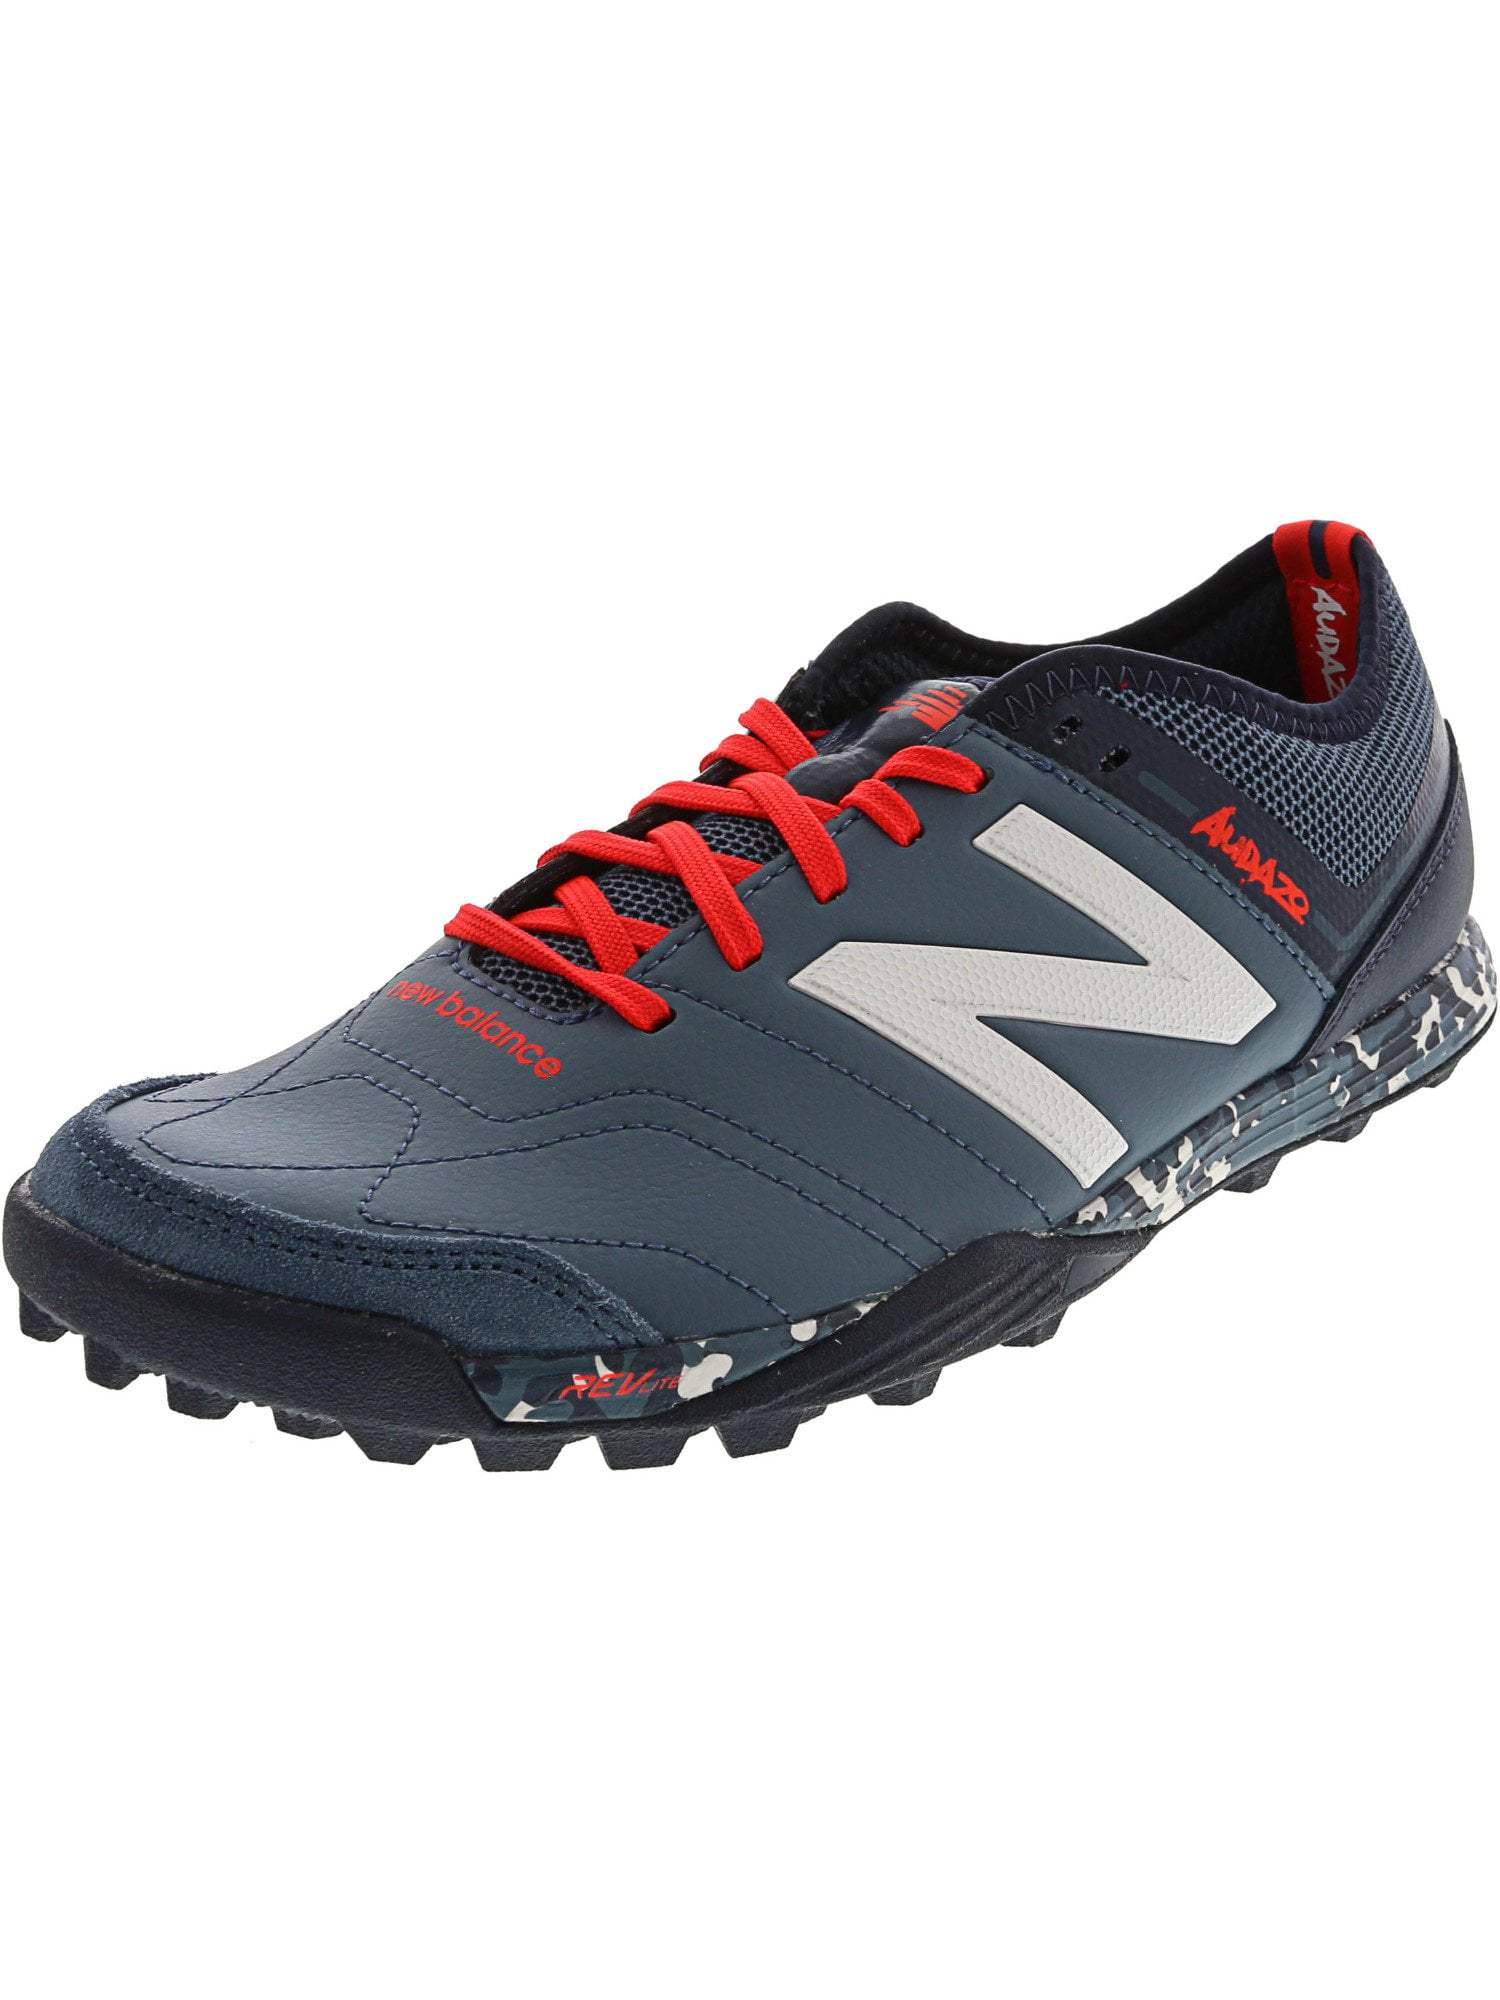 New Balance Men's Msapt Lp3 Ankle-High Soccer Shoe - 5.5W | Walmart Canada